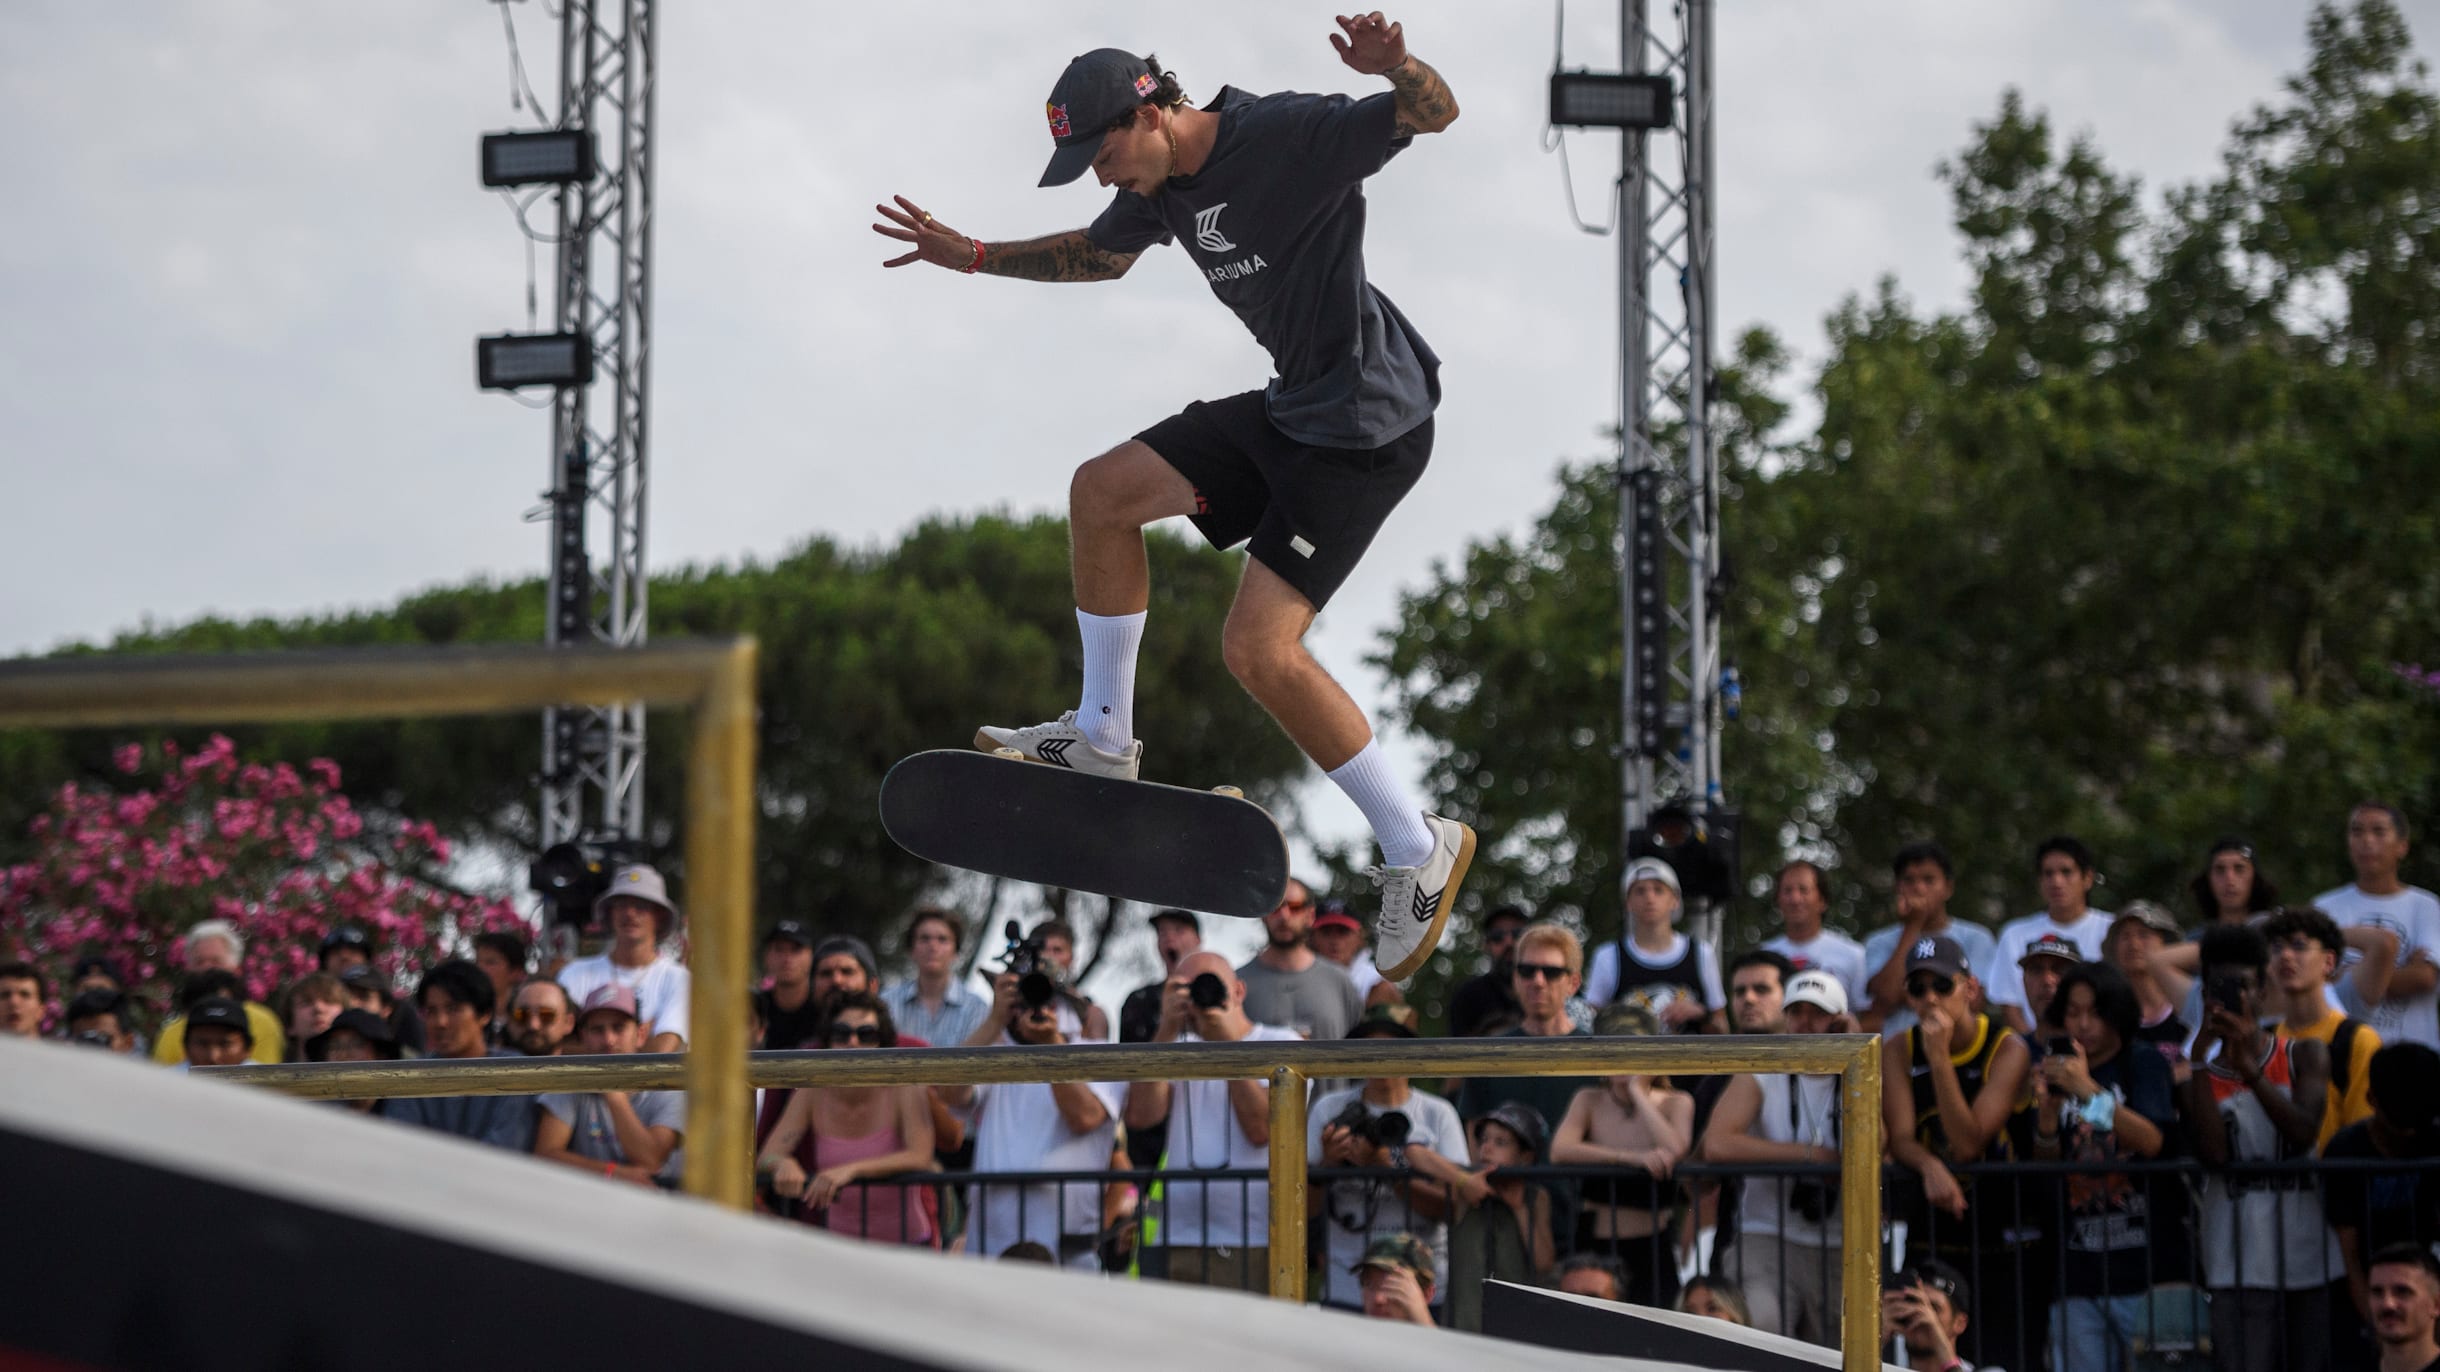 Druppelen Algemeen Actie Portugal's skateboard star Gustavo Ribeiro looks ahead: “I still want more”